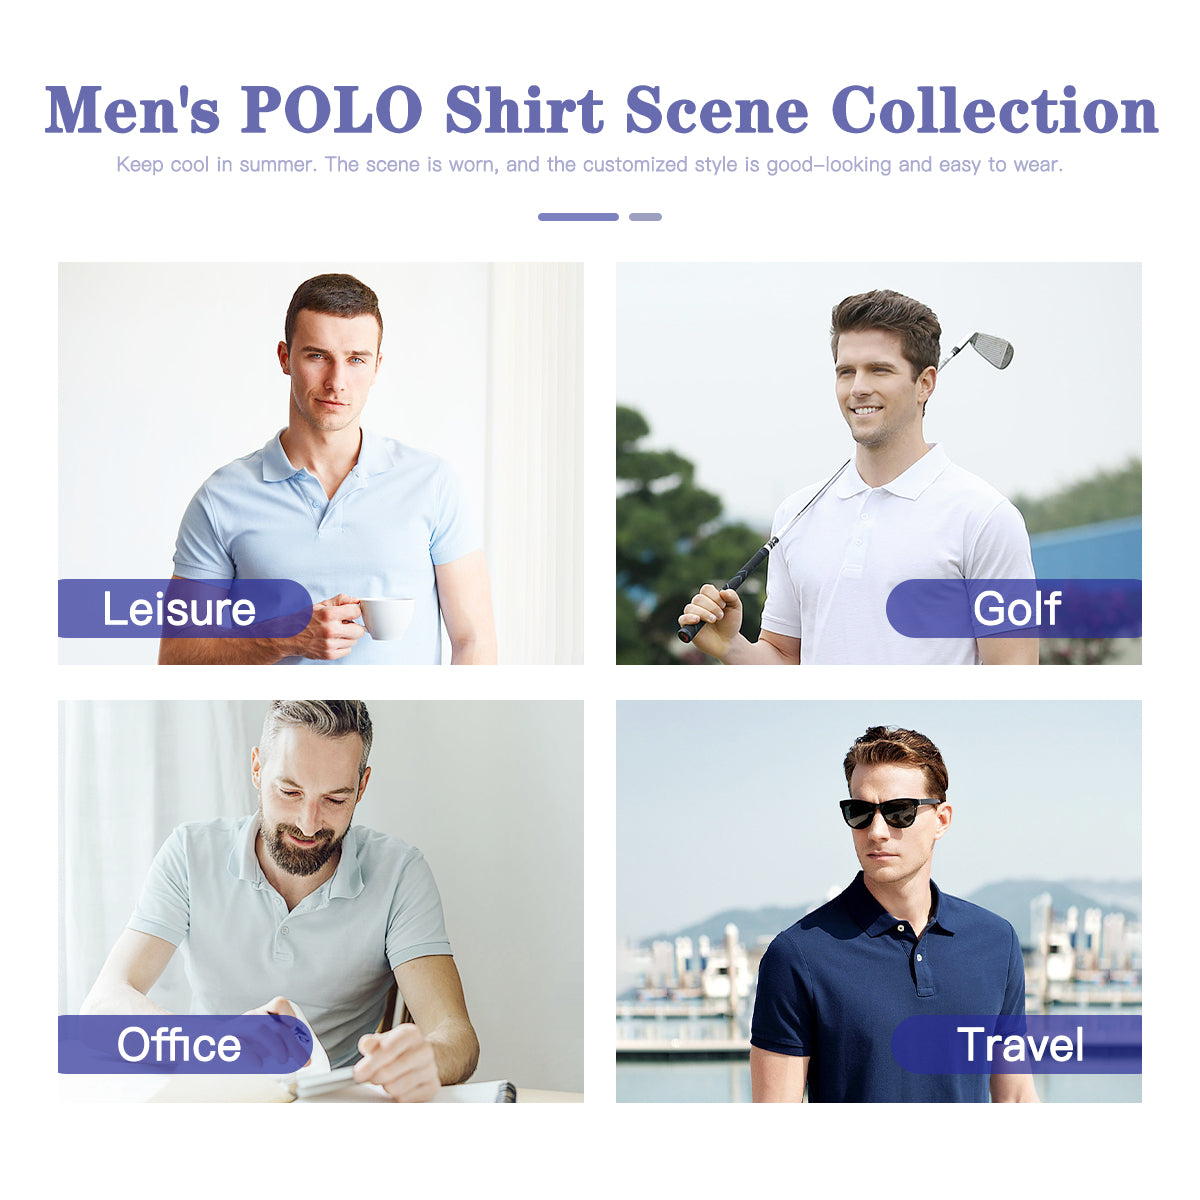 Polo Shirt Men, Retro Polo Shirt, Mod Shirt Men, Mid Century Shirt Men, Geometric Shirt Men, Vintage Polo Shirt Style Shirt, Retro Top Men